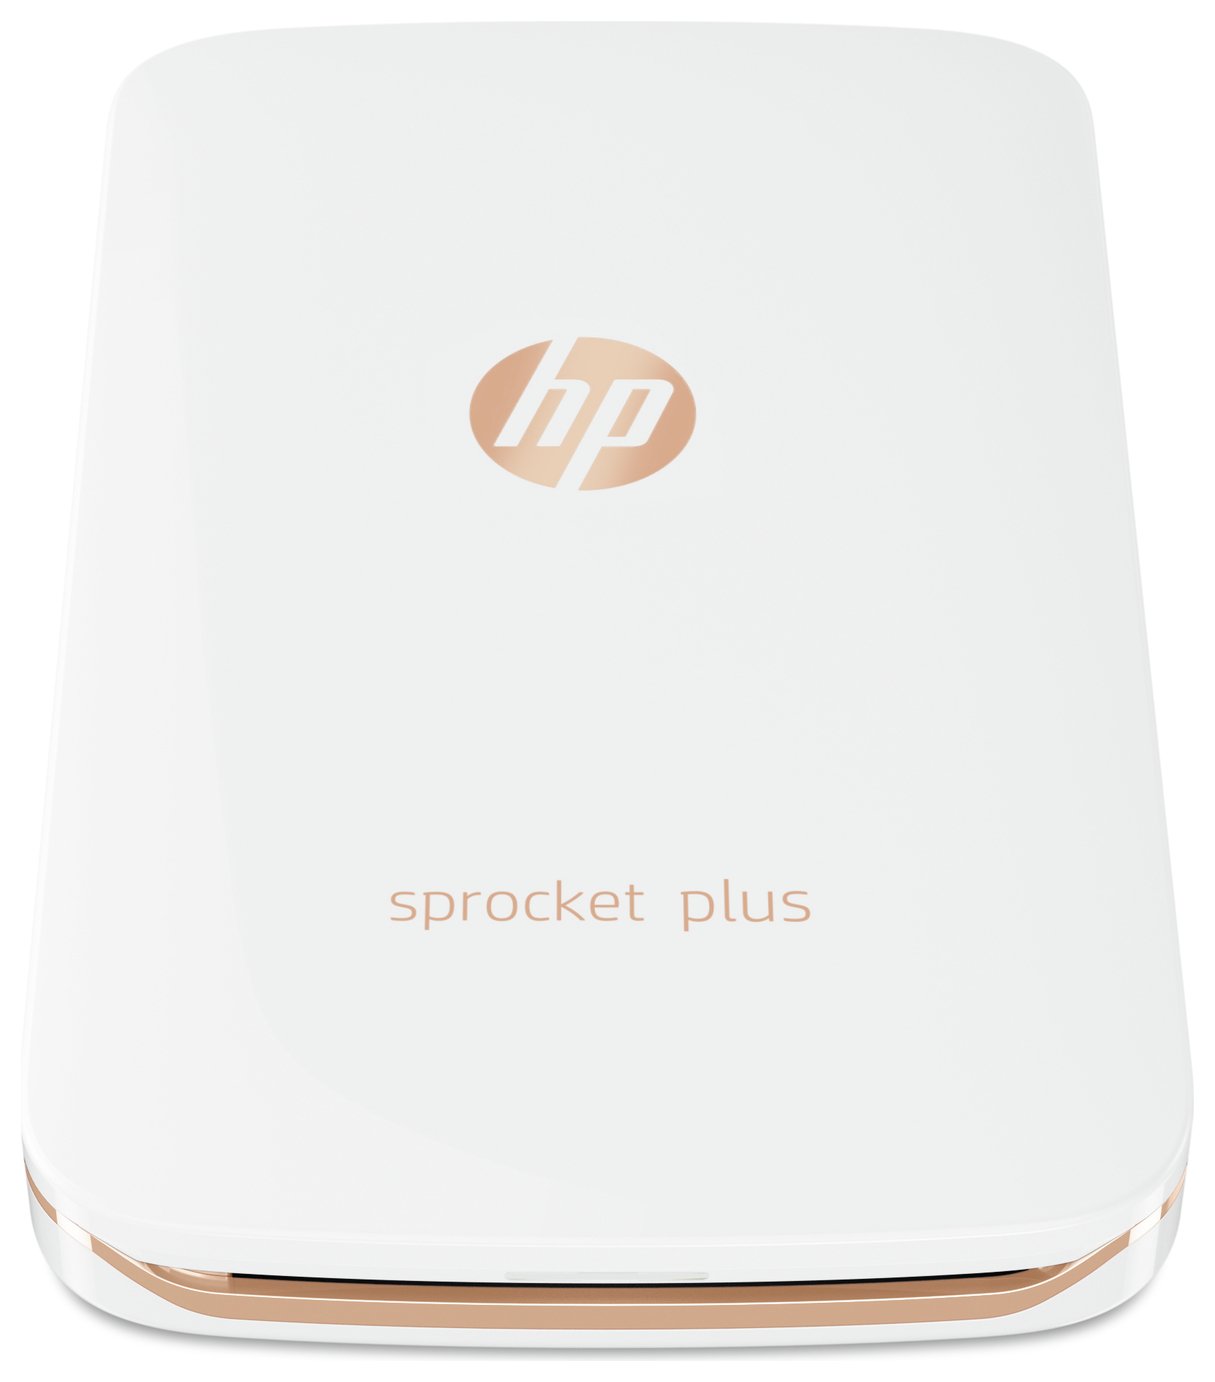 HP Sprocket Plus Portable Photo Printer